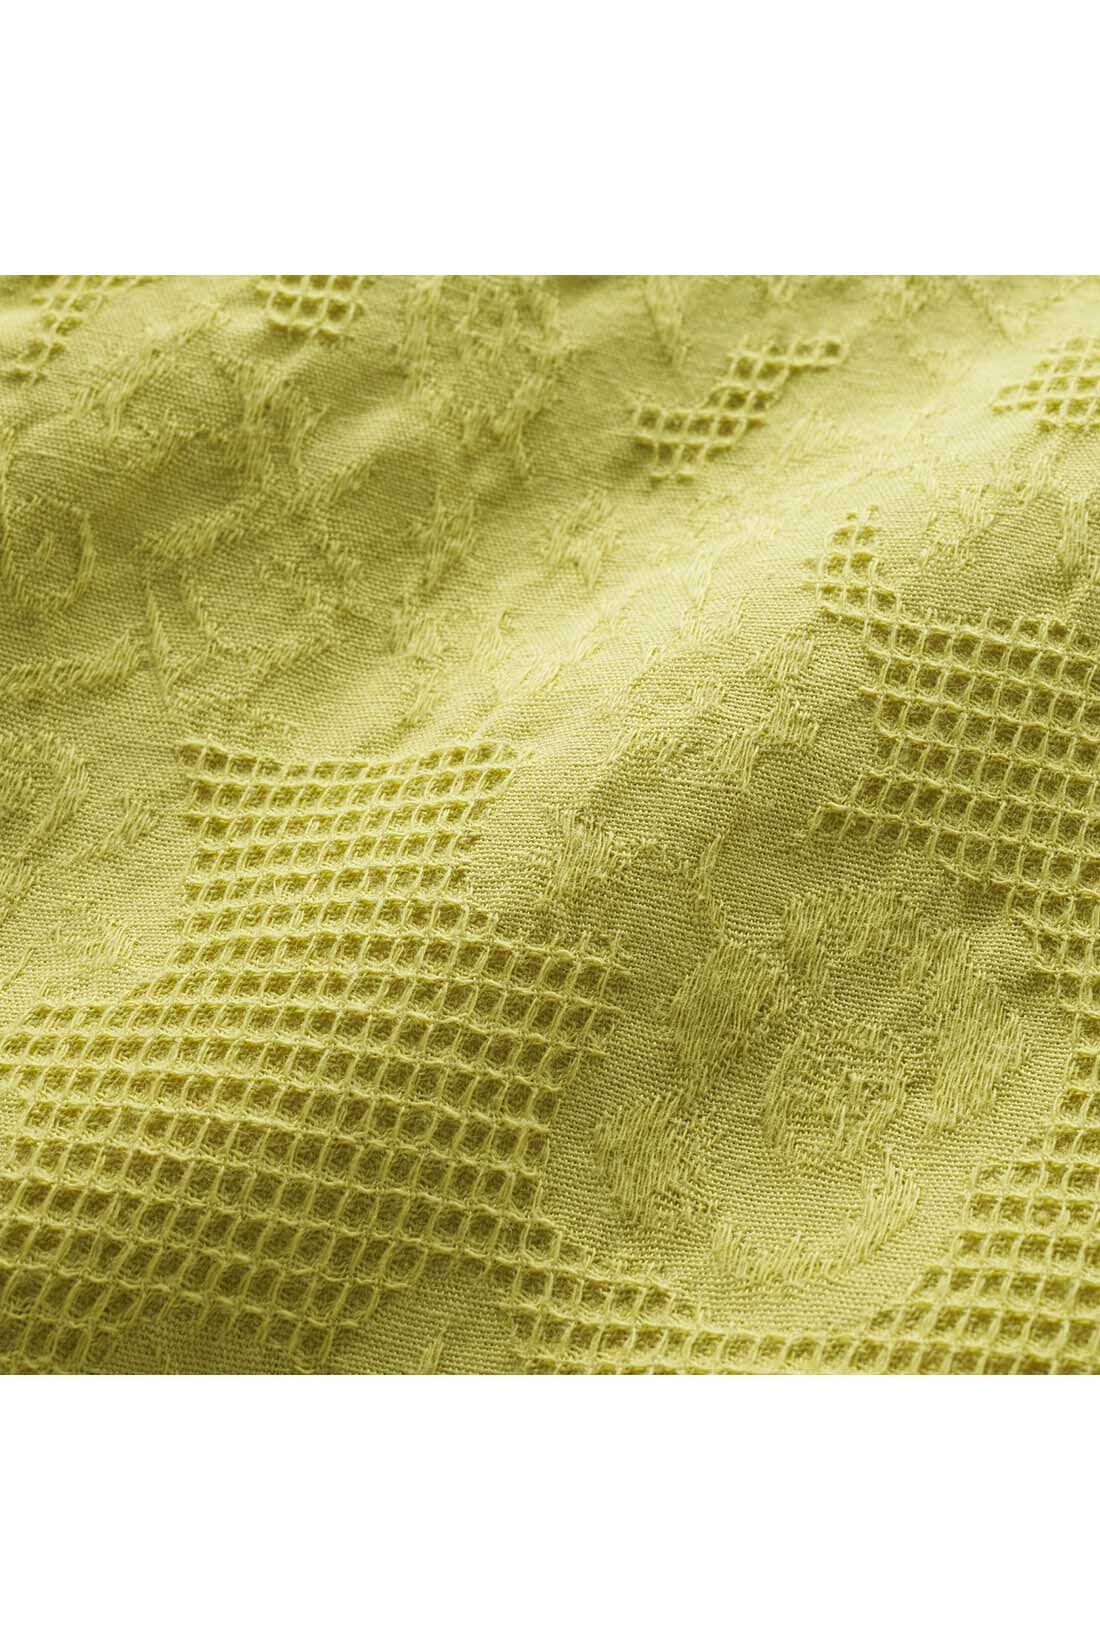 IEDIT[イディット]　フラワー柄のコットンドビープルオーバー〈ライムグリーン〉|格子柄の中に花が浮き立つ、立体的な織り柄のコットンドビー素材がさらりと快適。